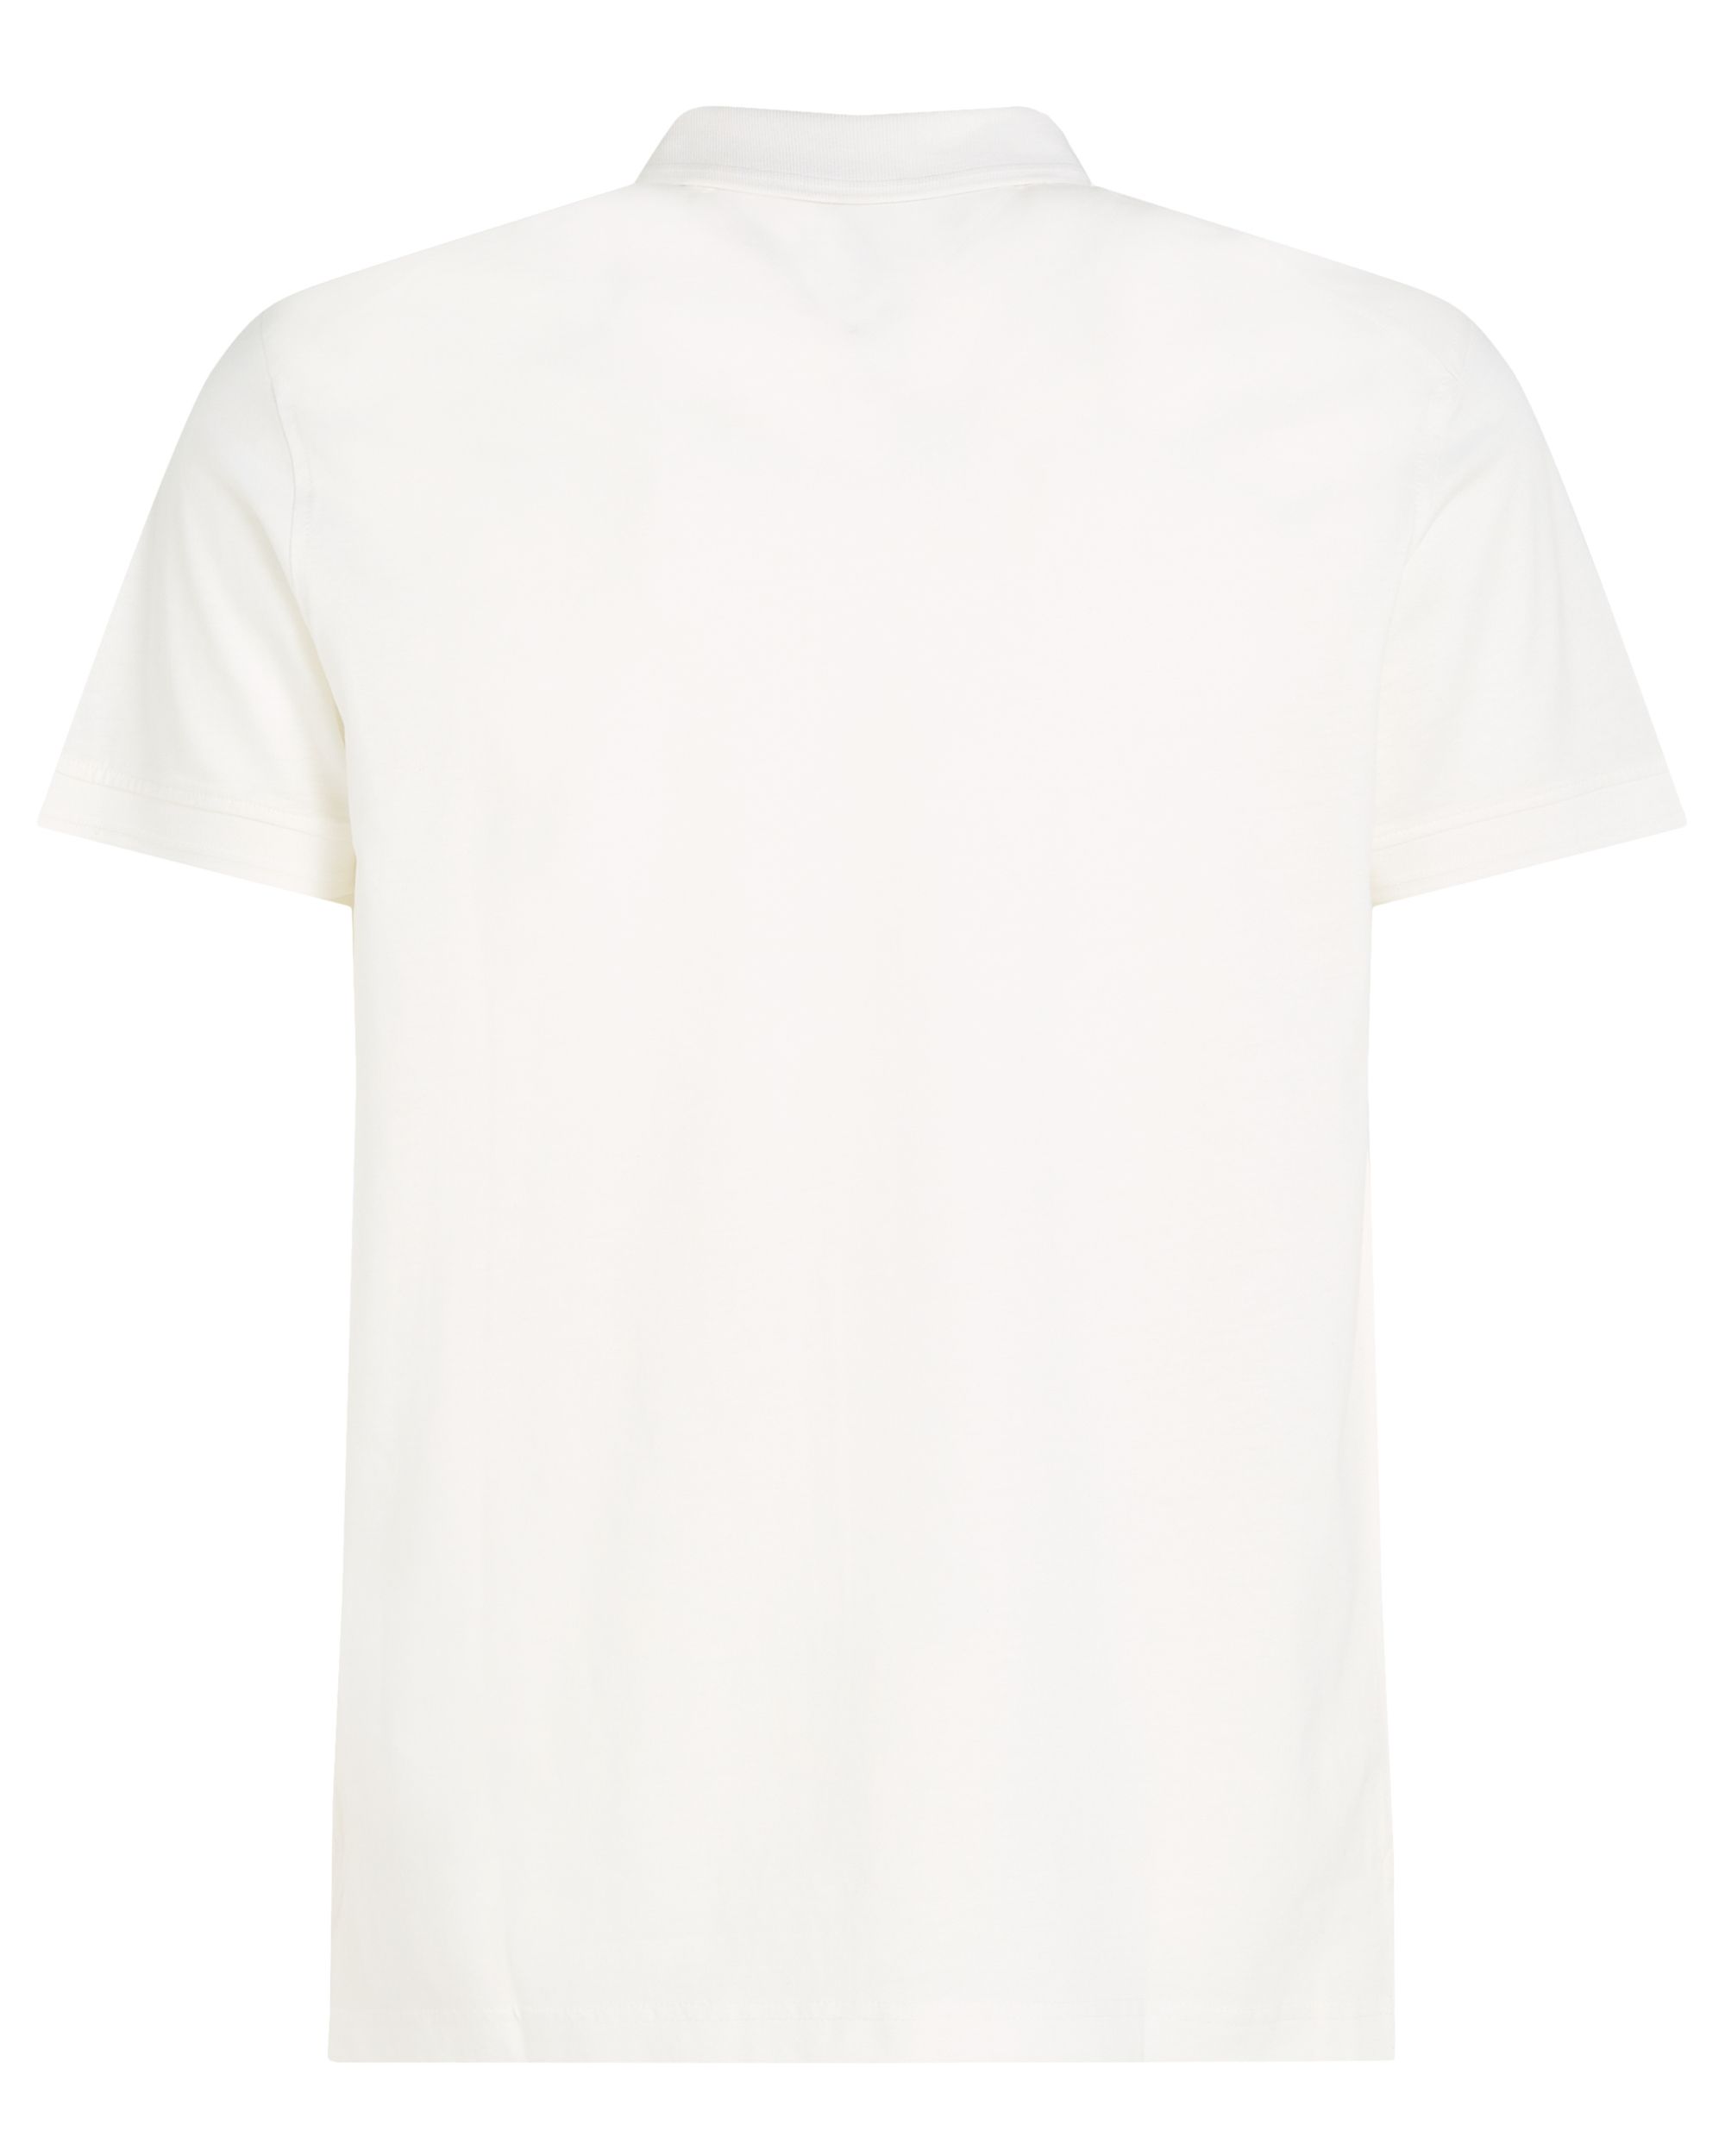 Tommy Hilfiger Menswear Polo KM Off white 095635-001-L